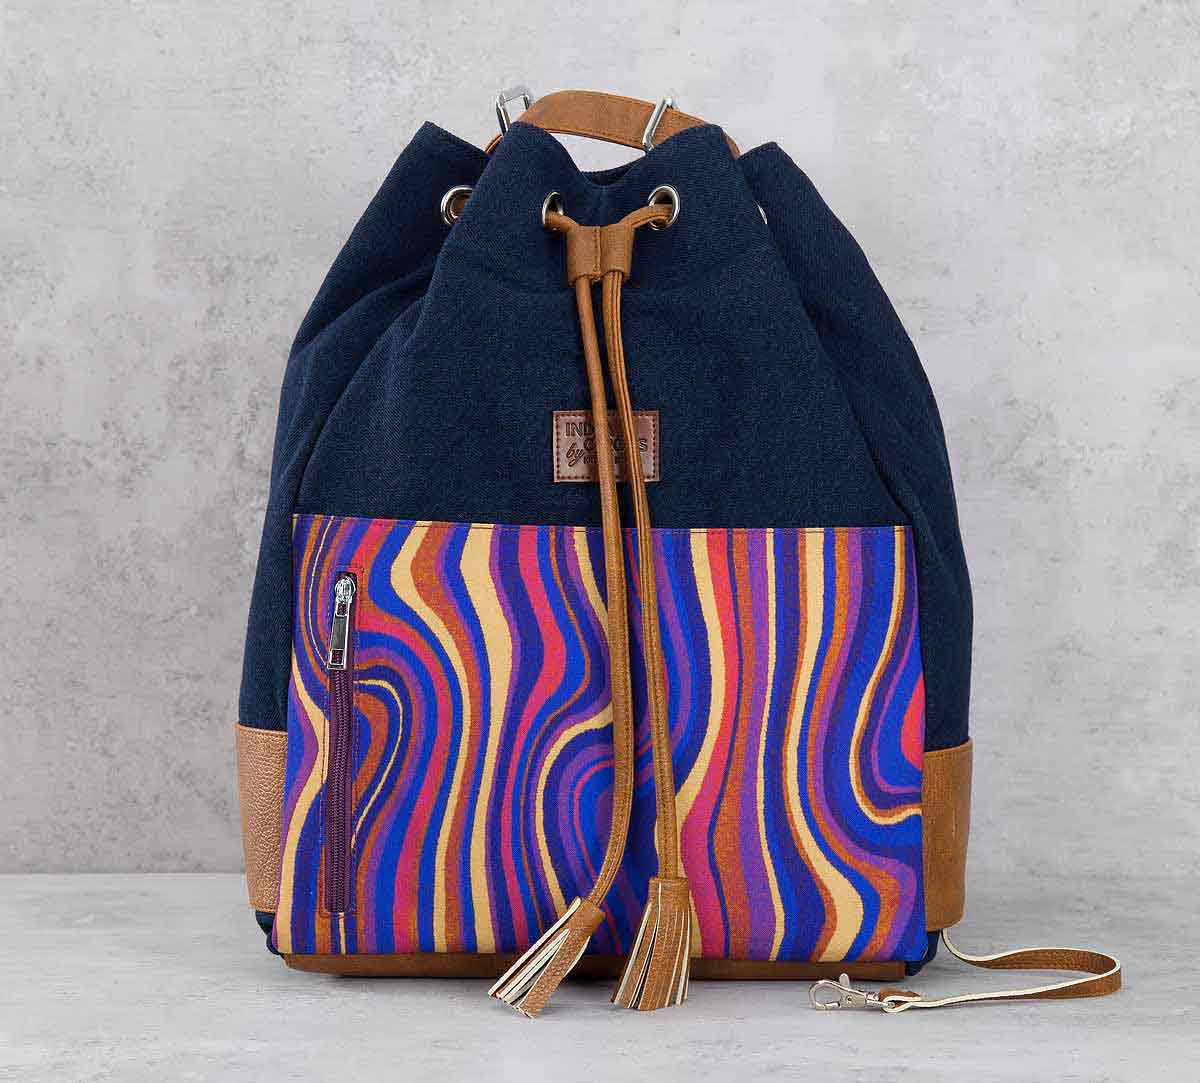 Shop for designer hobo bags online - indiacircus.com